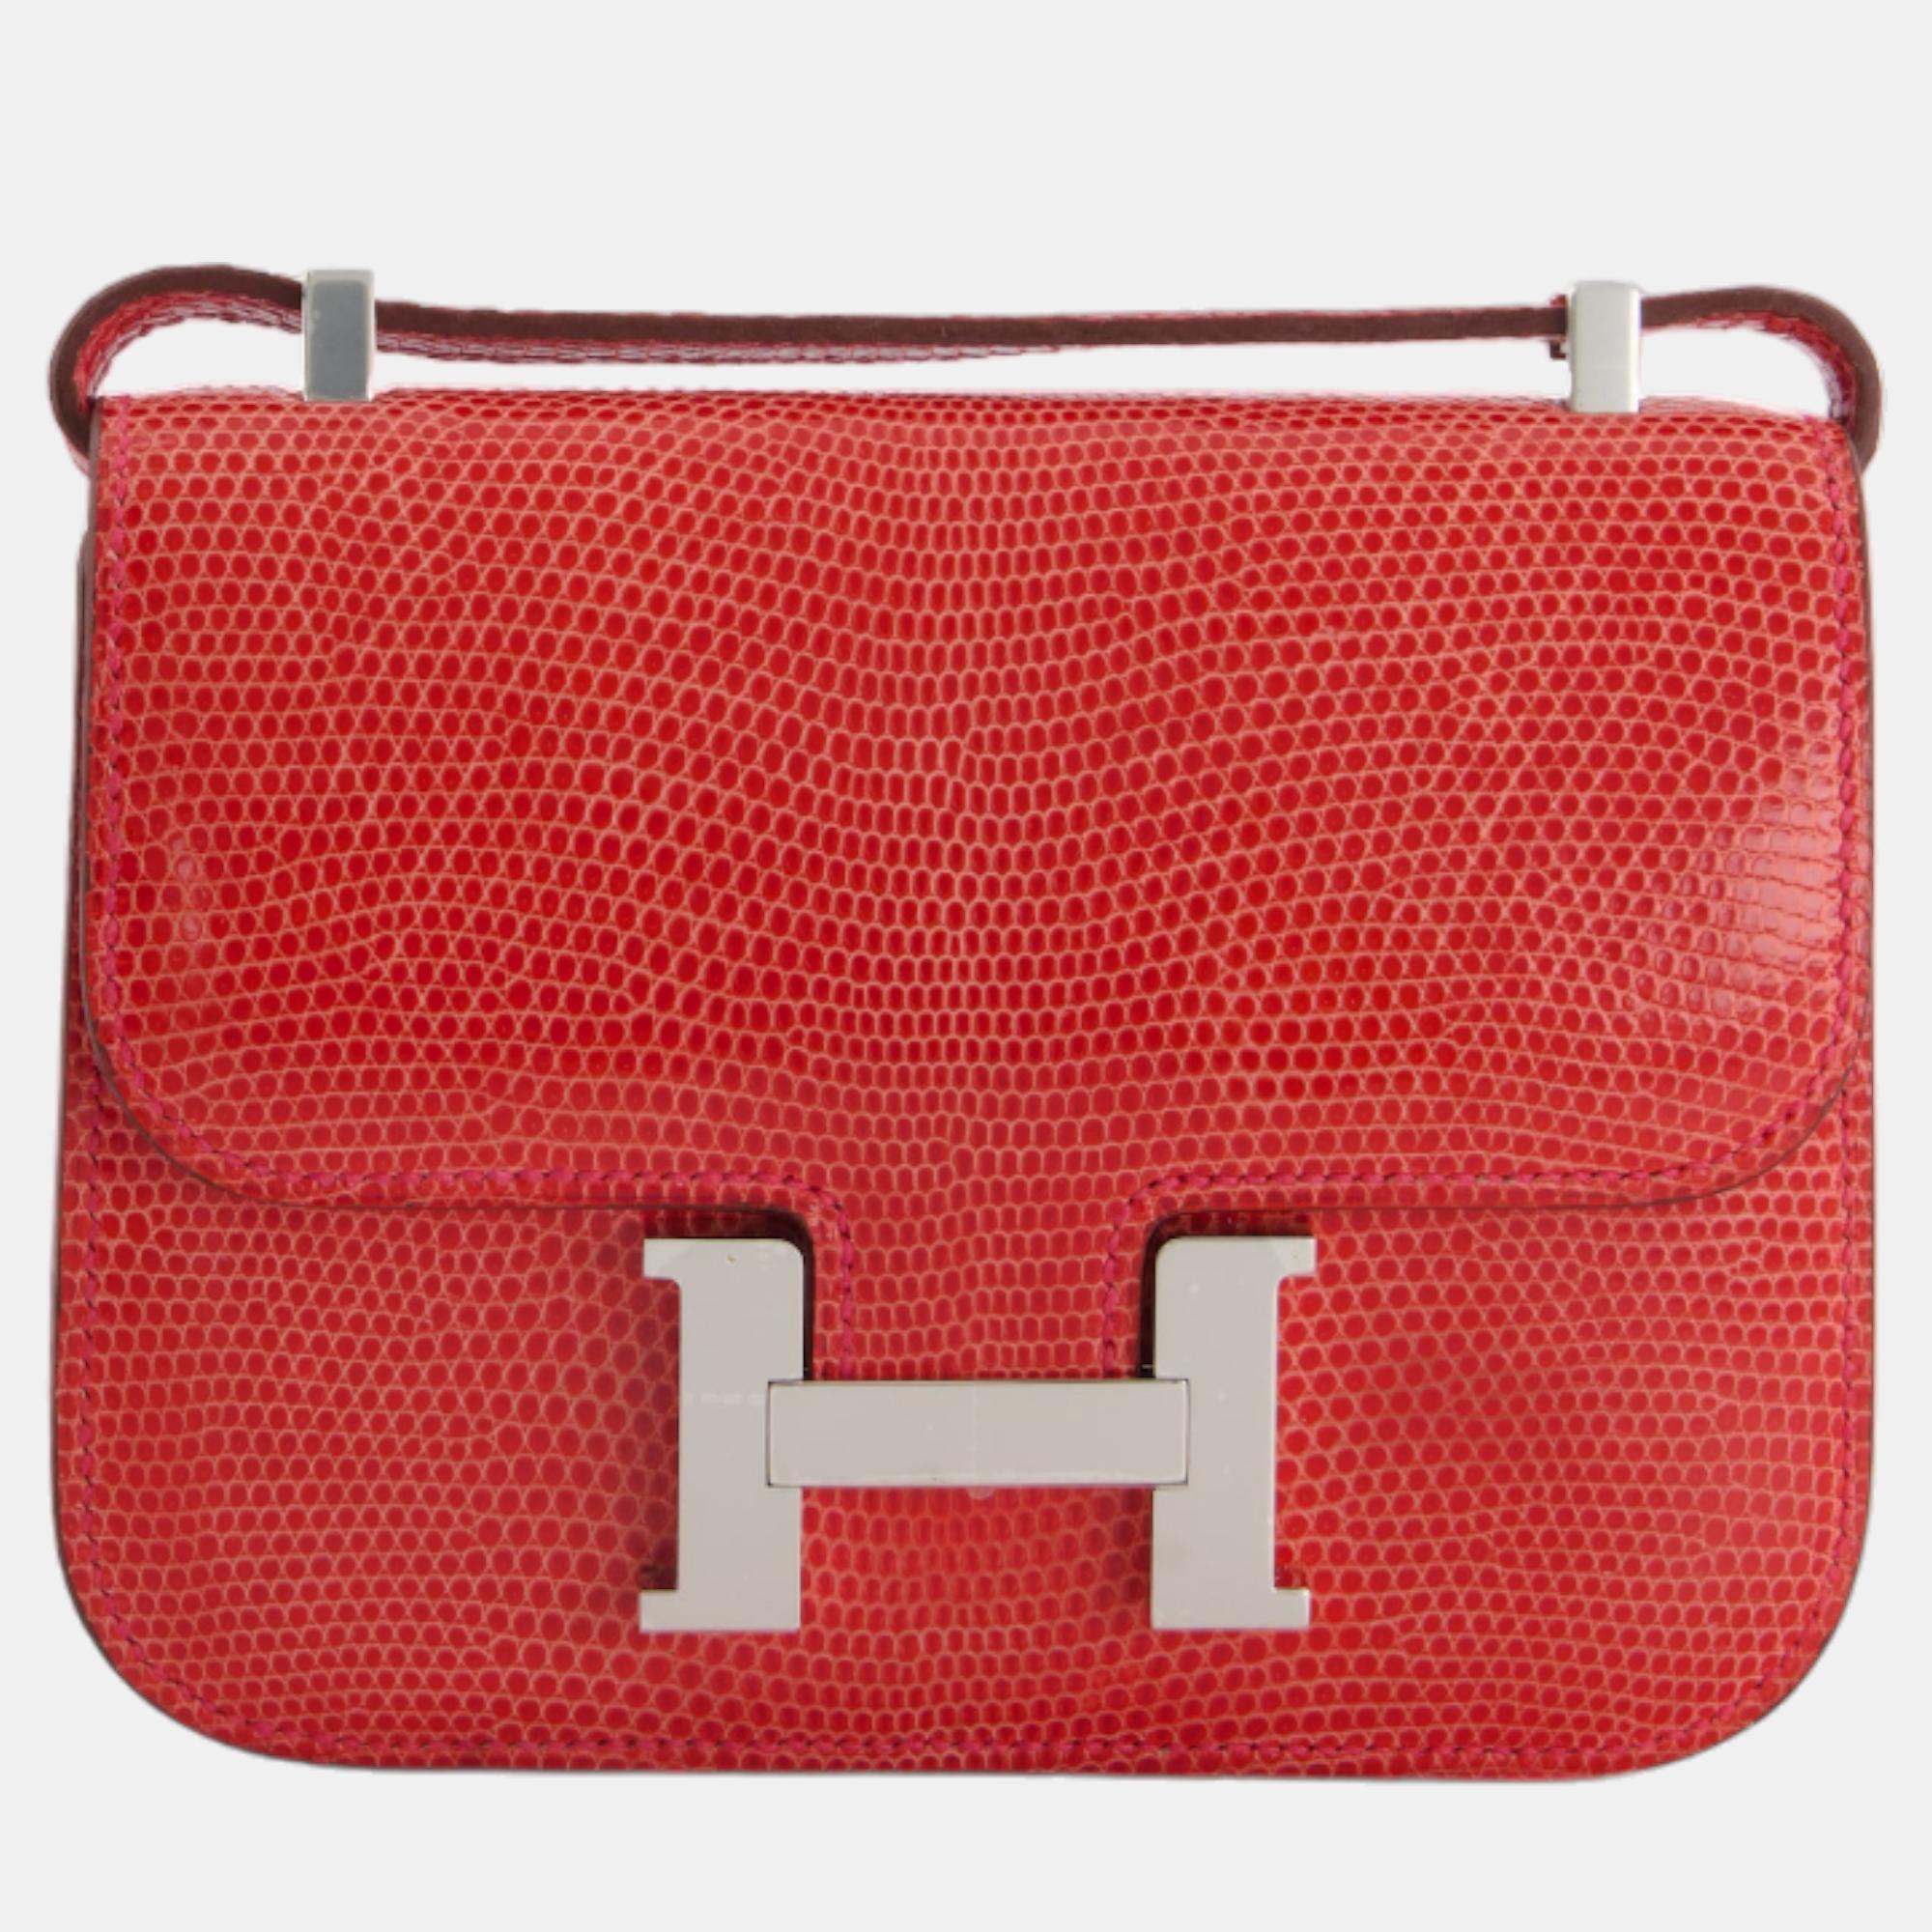 Hermes micro constance bag 13cm in rouge lizard with palladium hardware